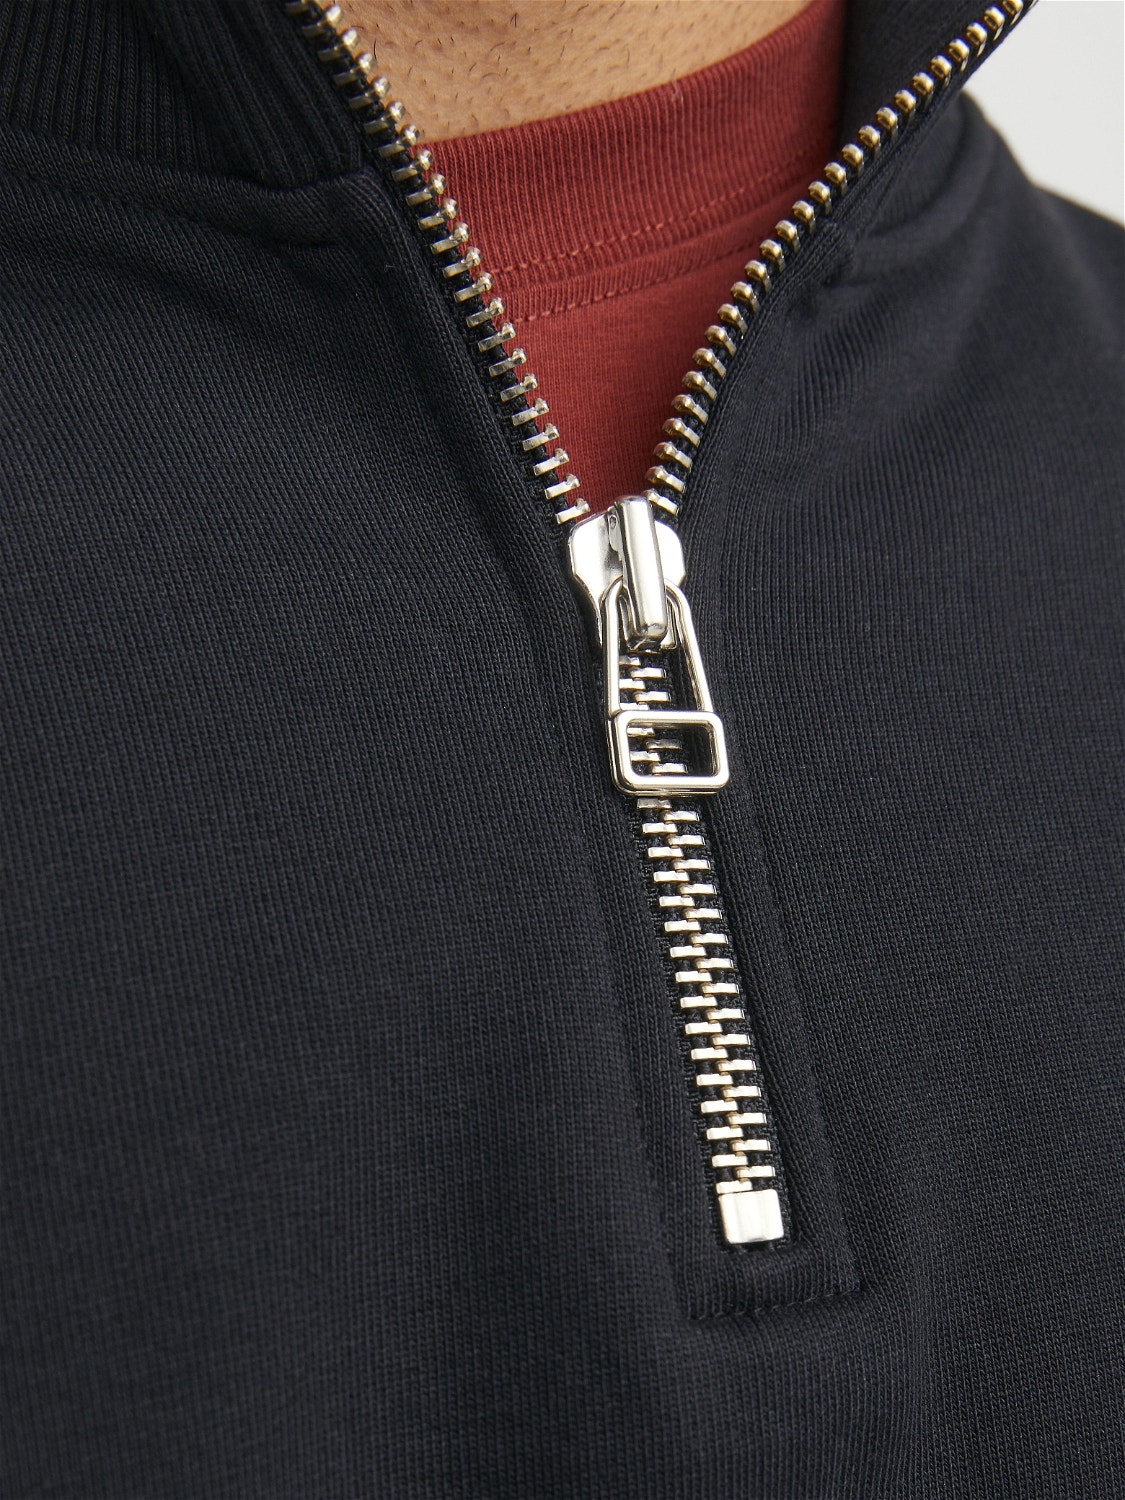 Jack & Jones RDD Gedruckt Sweatshirt mit halbem Reißverschluss -Black - 12252164